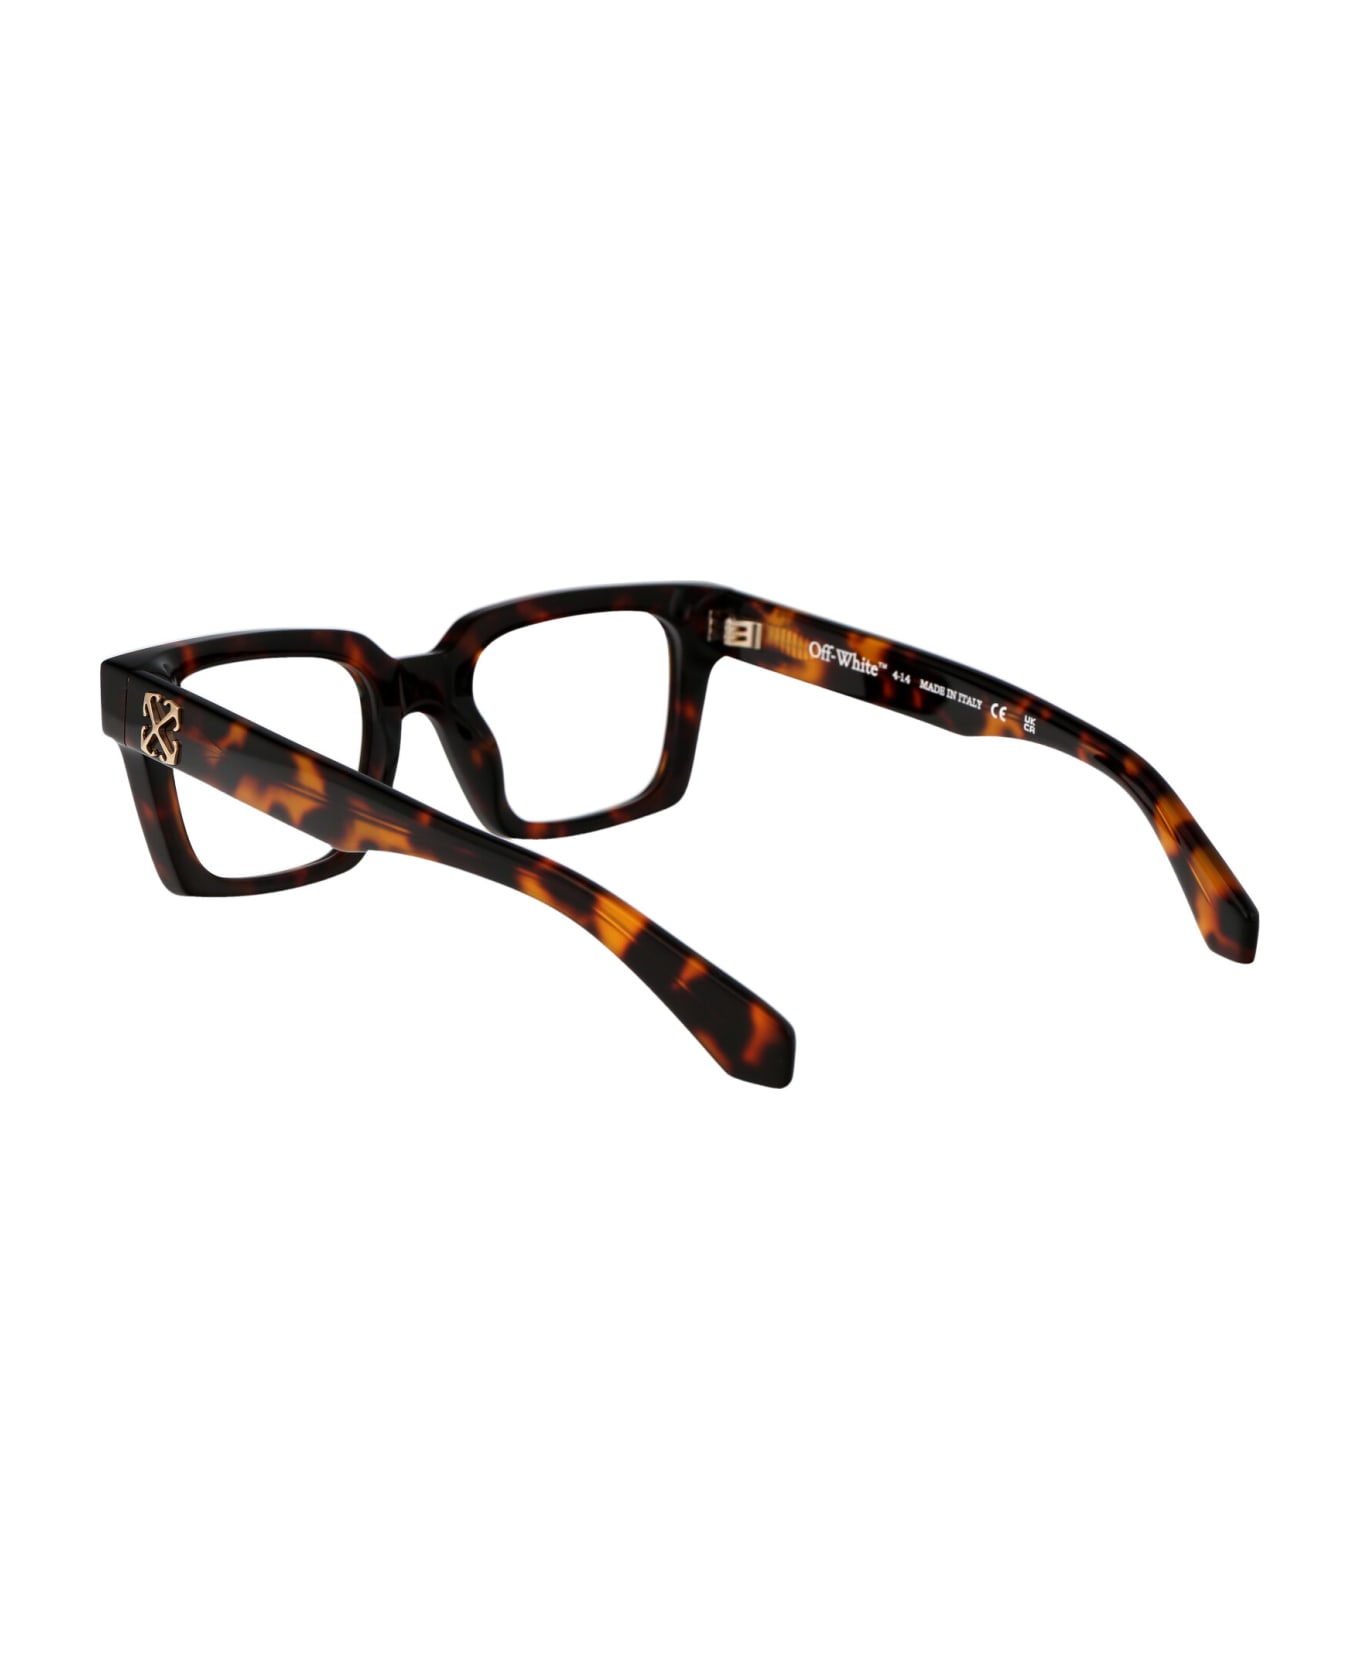 Off-White Optical Style 72 Glasses - 6000 HAVANA